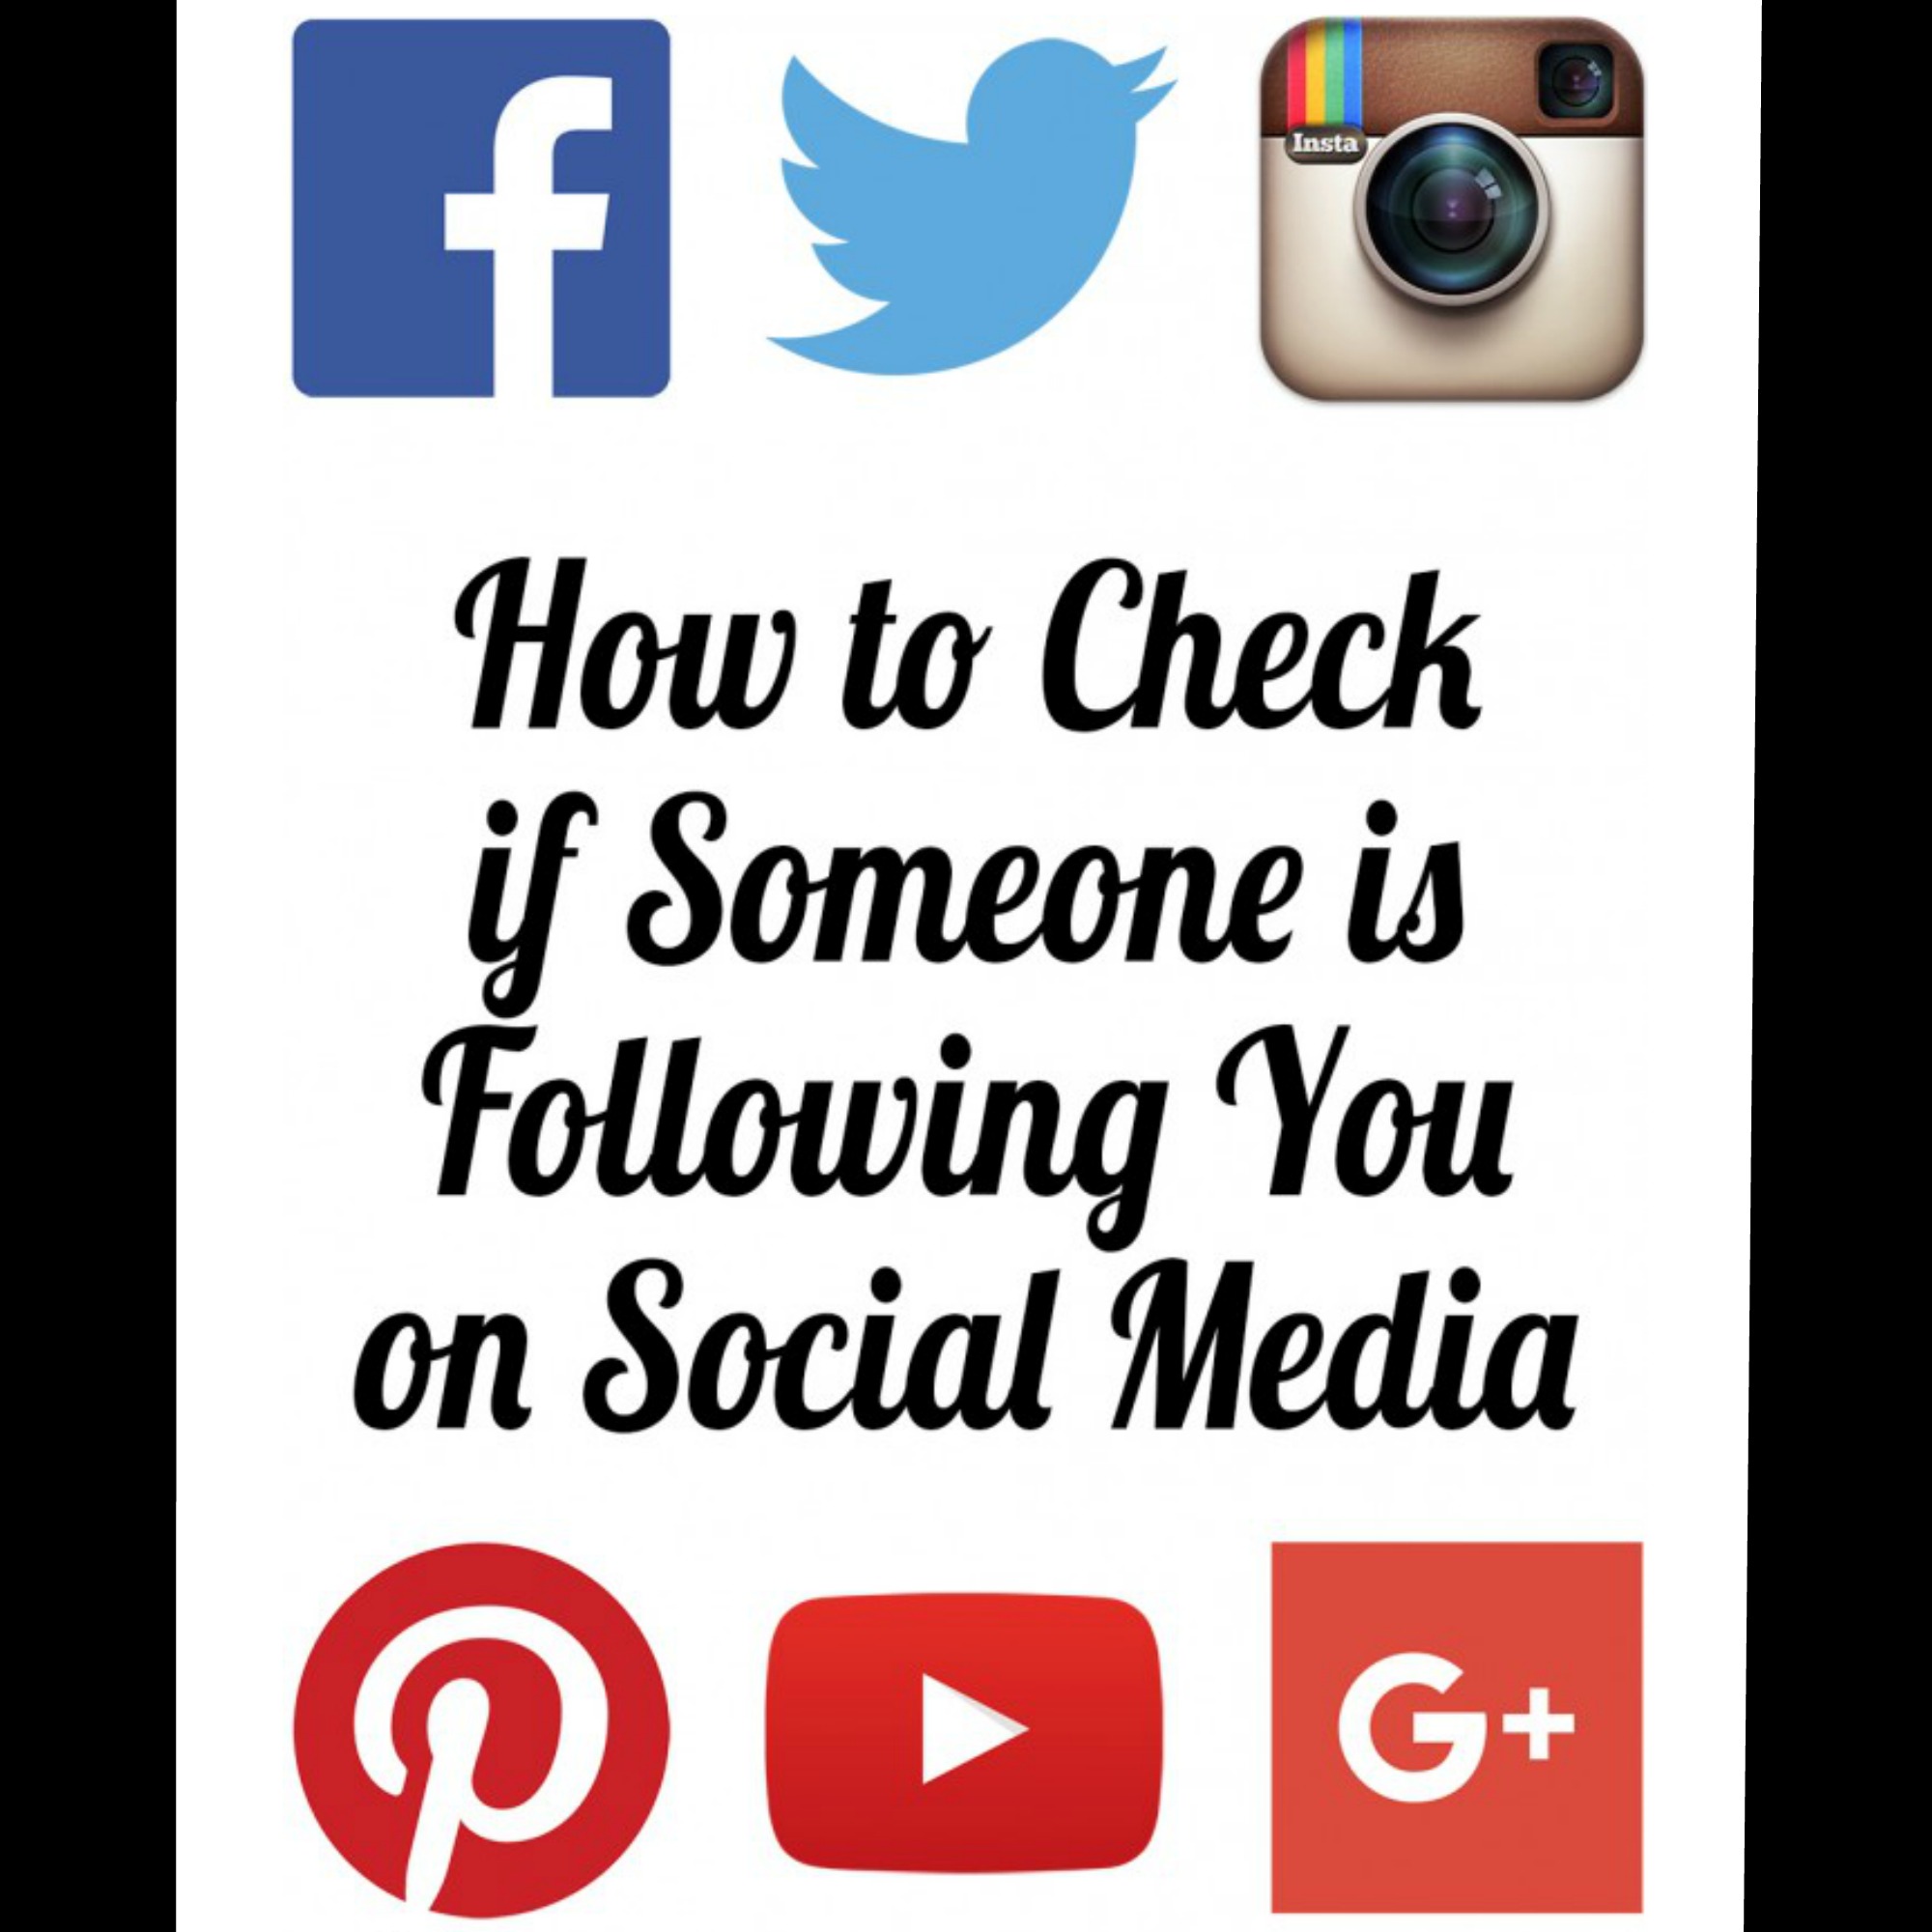 following you on social media